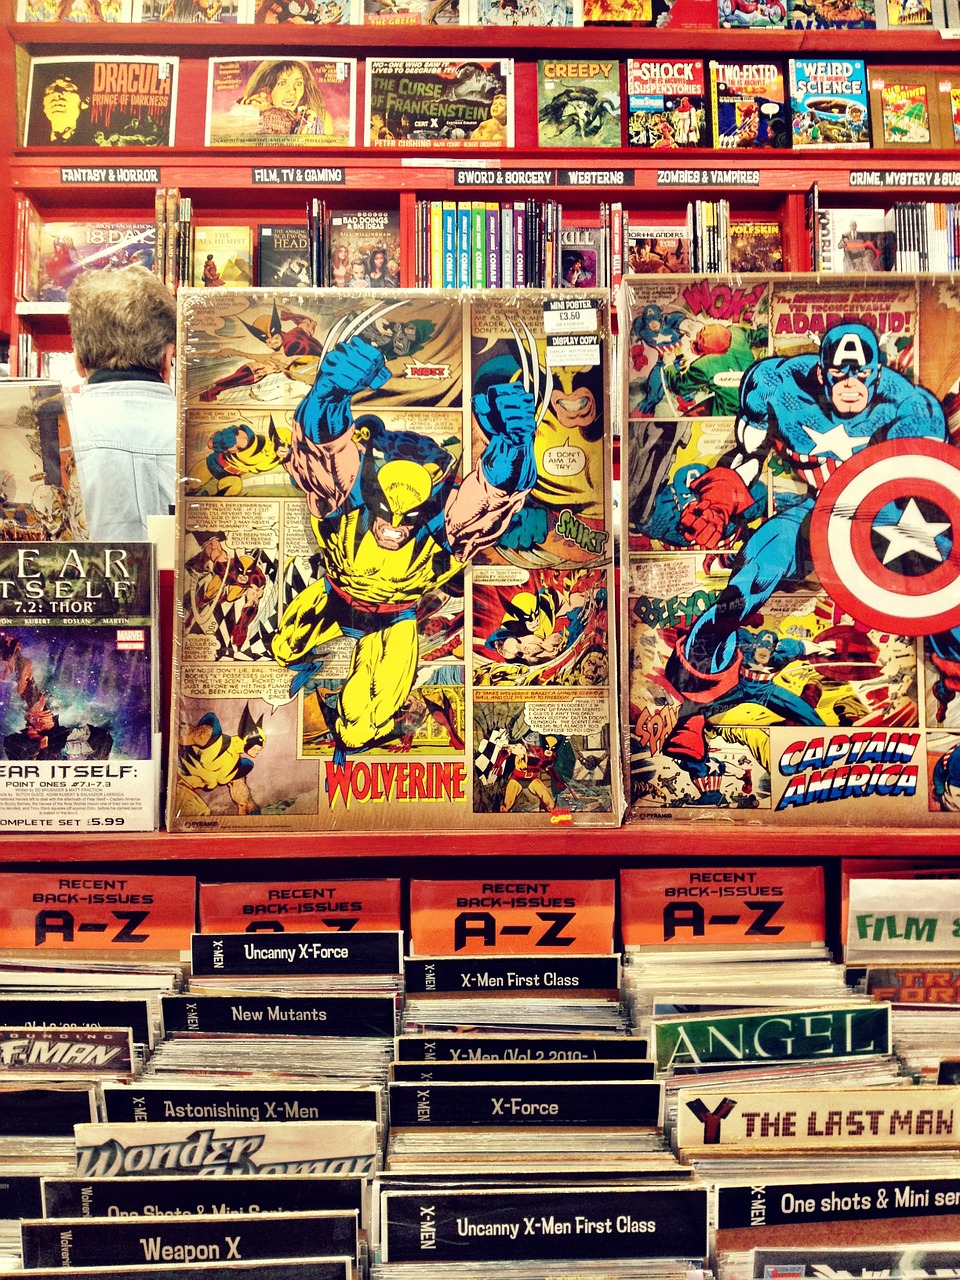 photo of interior of comic book shop